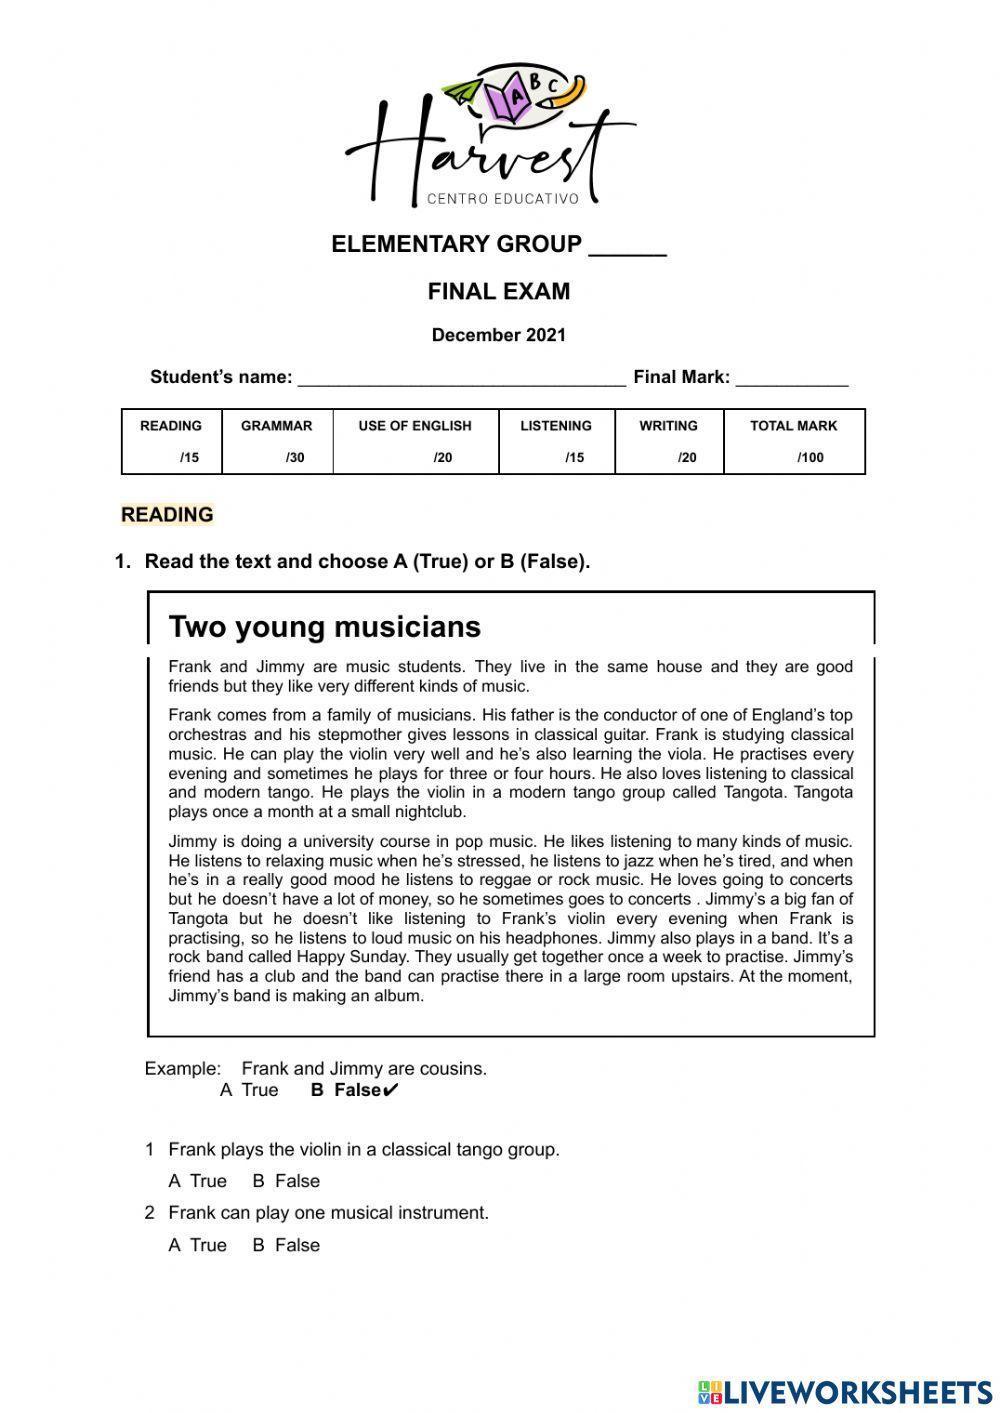 Elementary - Final Exam